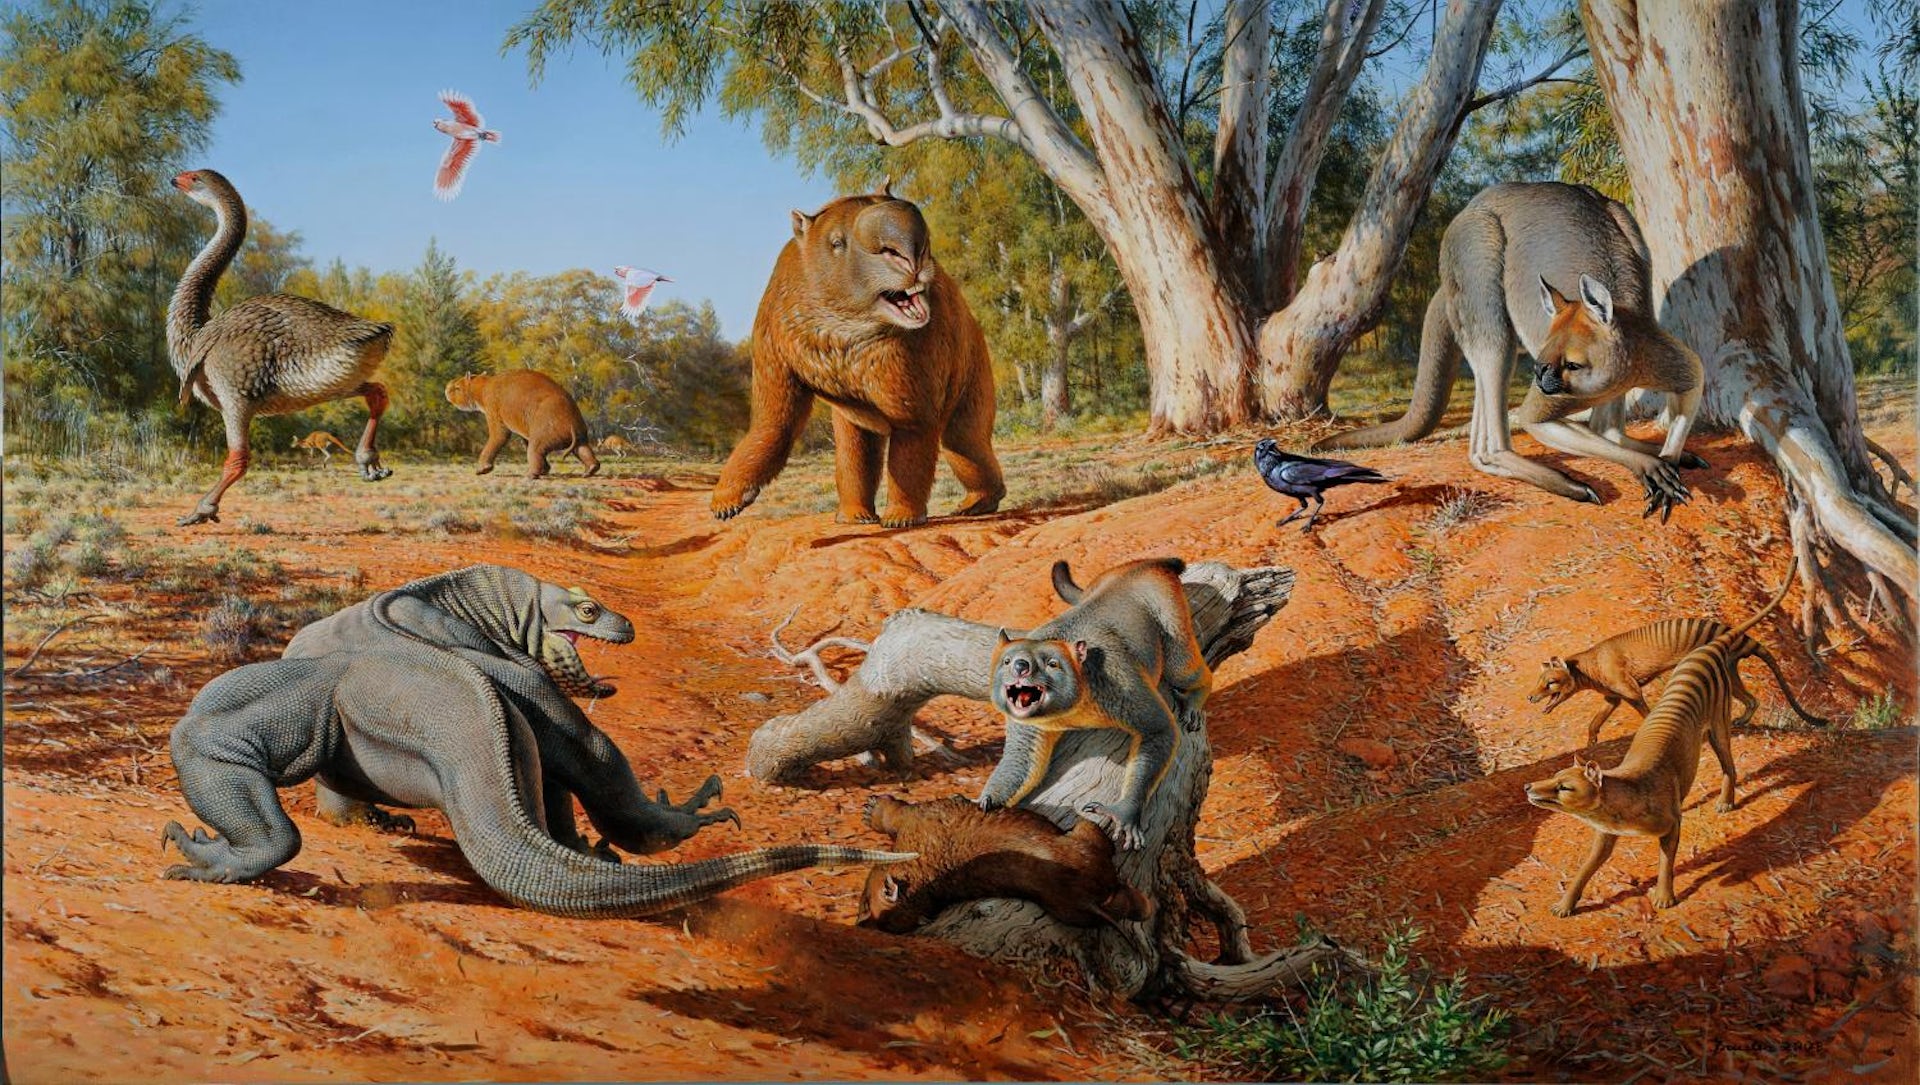 Reconstructii ale megafaunei comune australiene intr-un cadru de tufis deschis